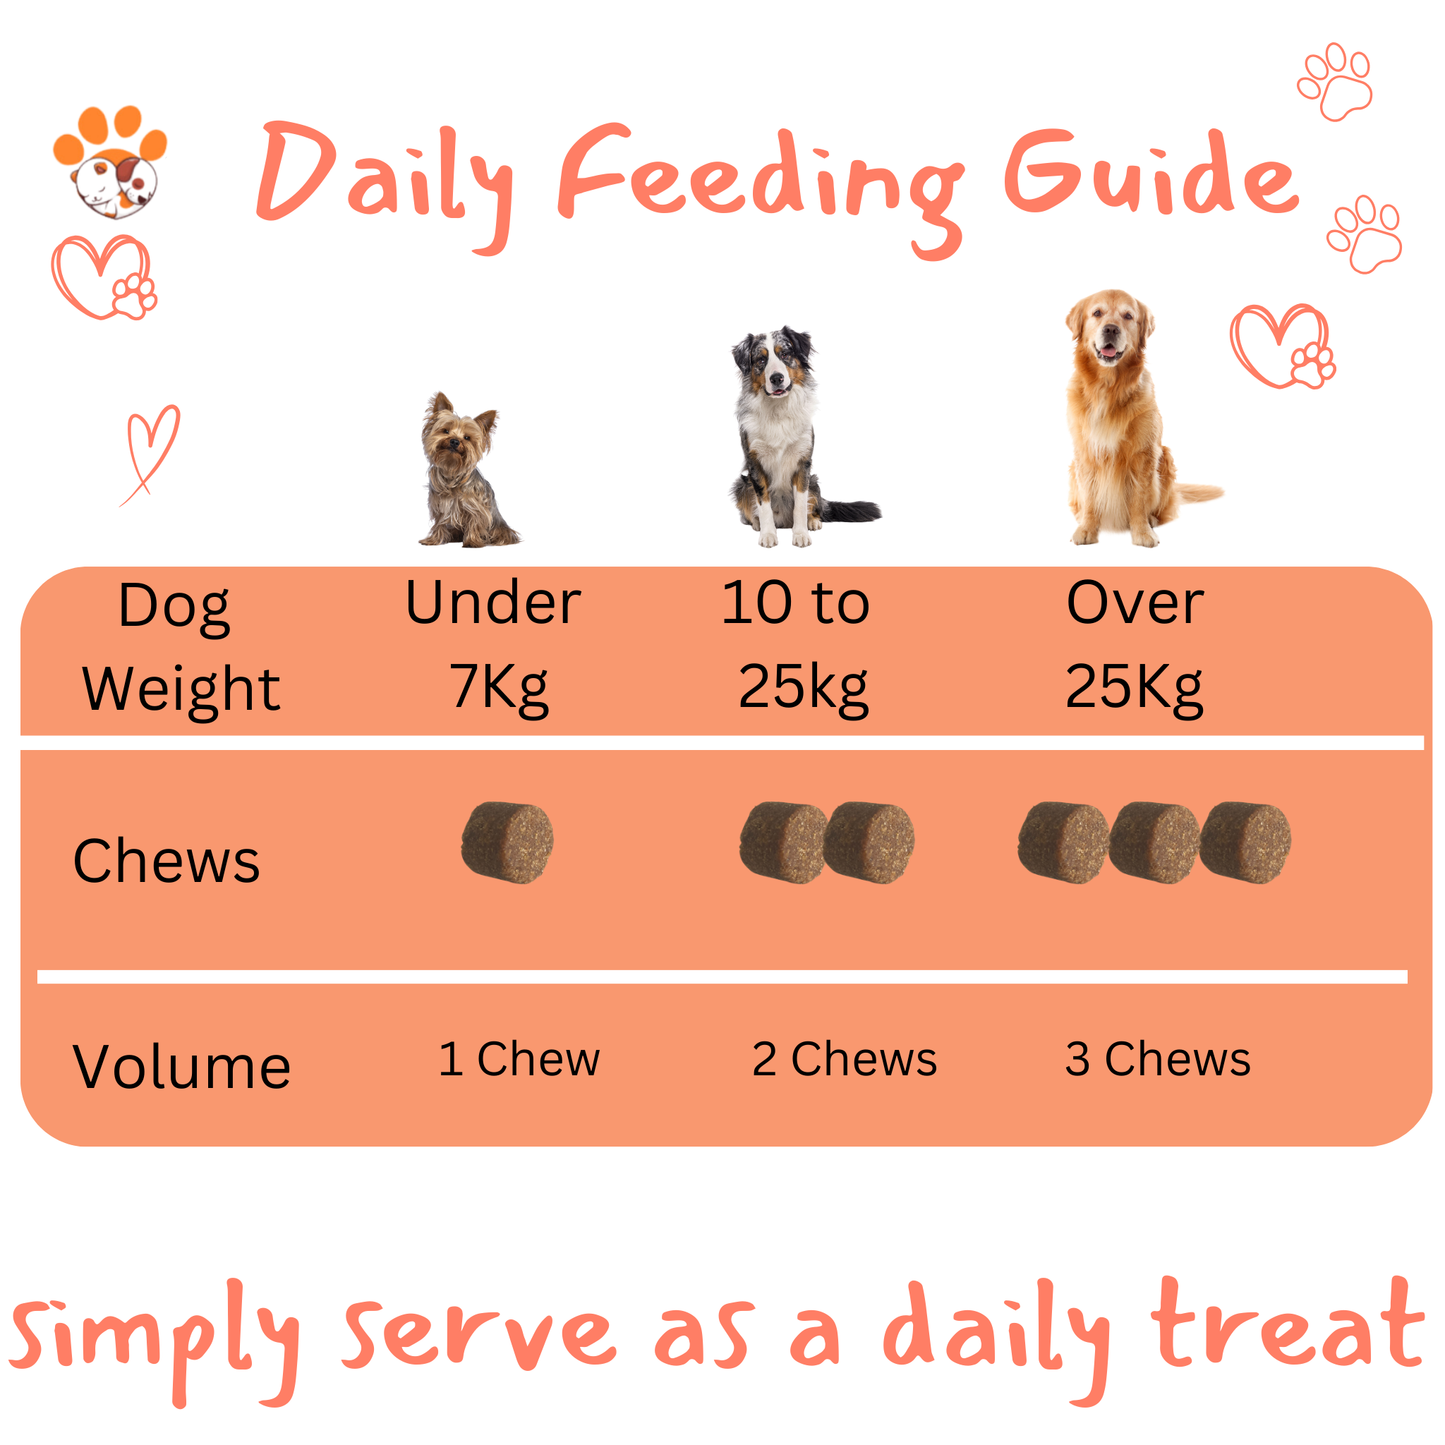 Feeding guide